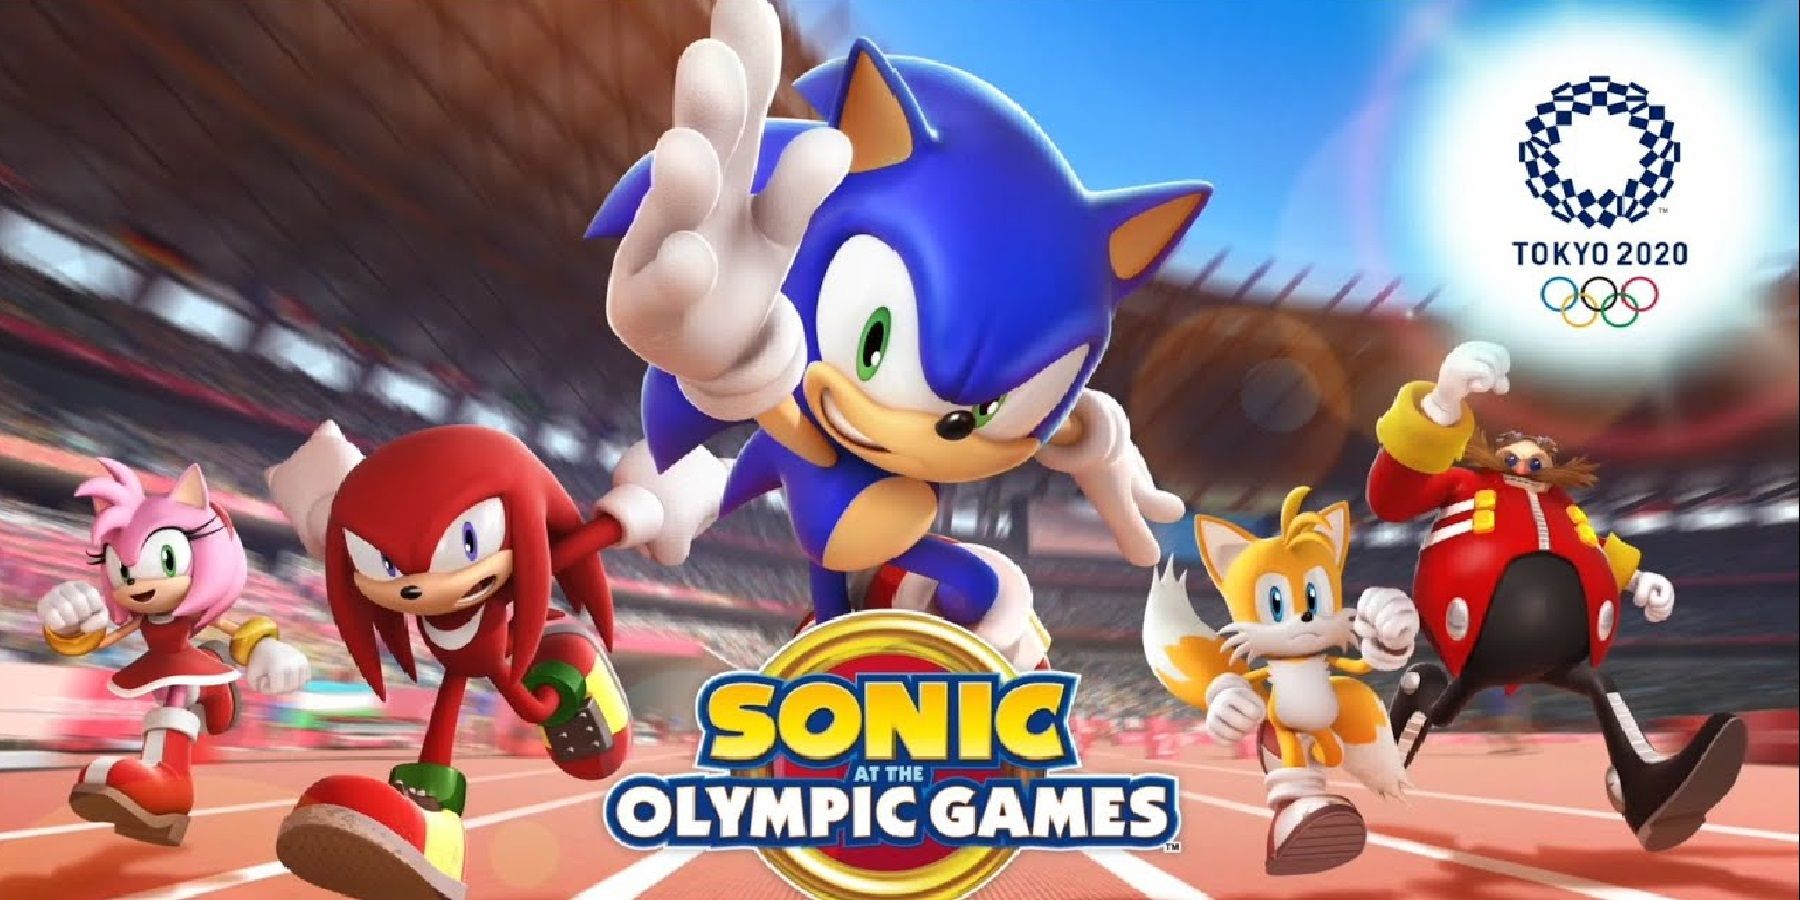 Sonic Olympics 2020 (Jpeg version)